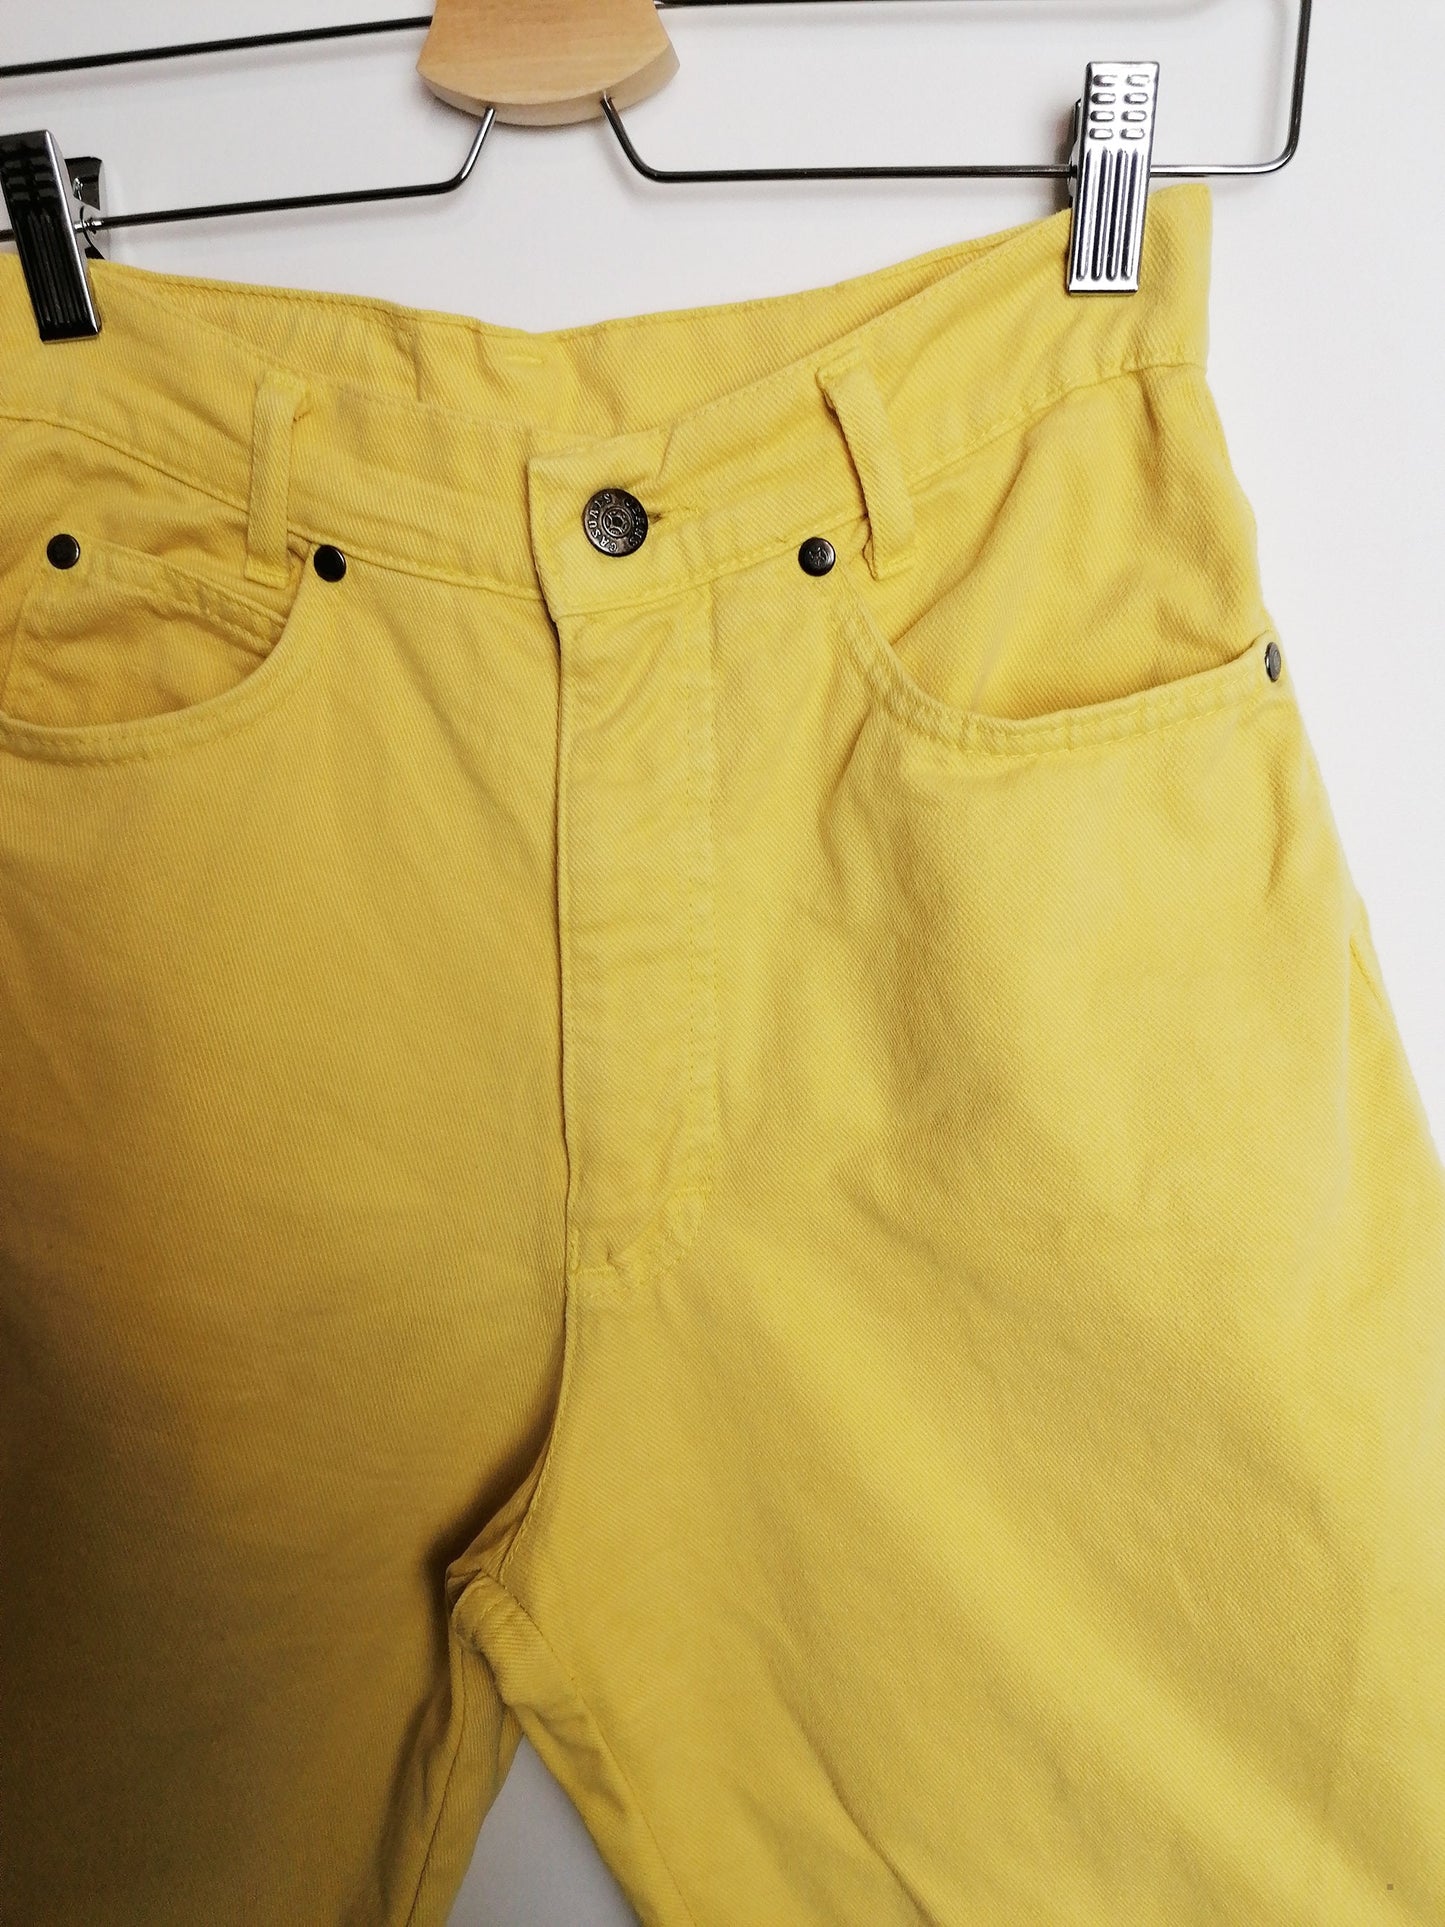 90's FLOP High Waist Retro Shorts Yellow  ~ size S-M / EU 36